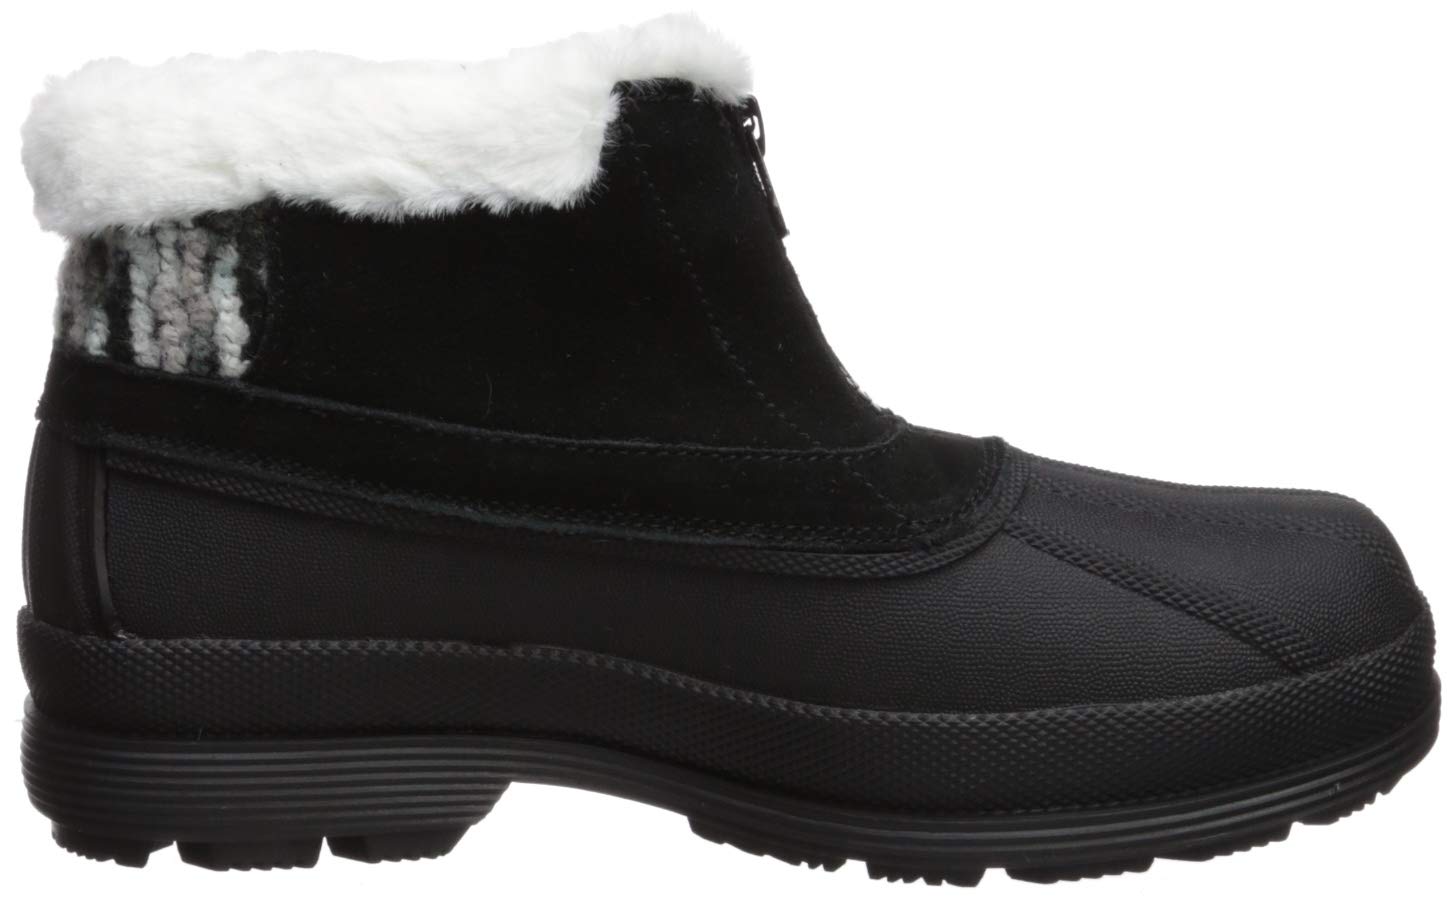 Propet womens Lumi Ankle Zip Snow Boot, Black/White, 6.5 XX-Wide US